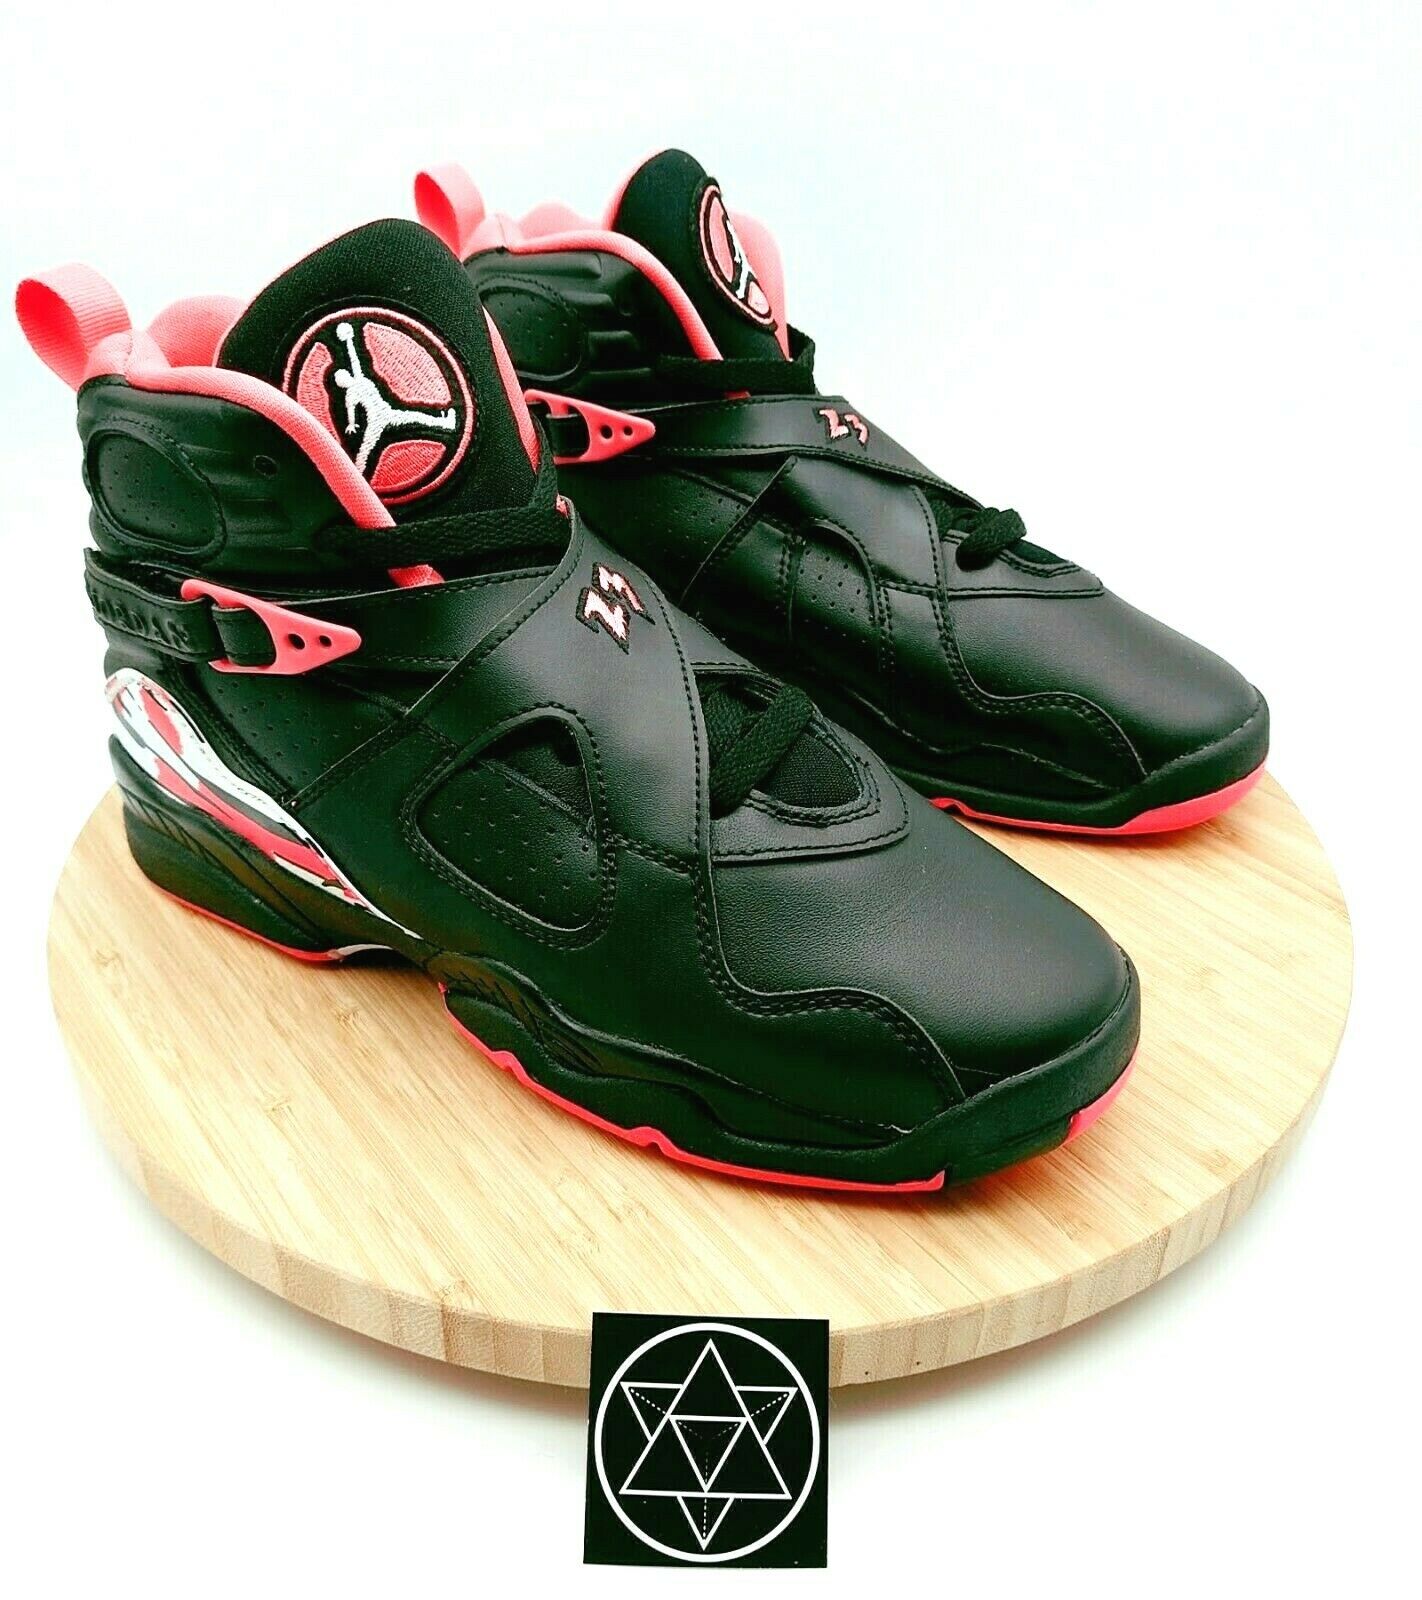 Nike Jordan 8 Retro Sneaker Shoes Black (580528-006) (GS) Size 4 Y / Womens 5.5